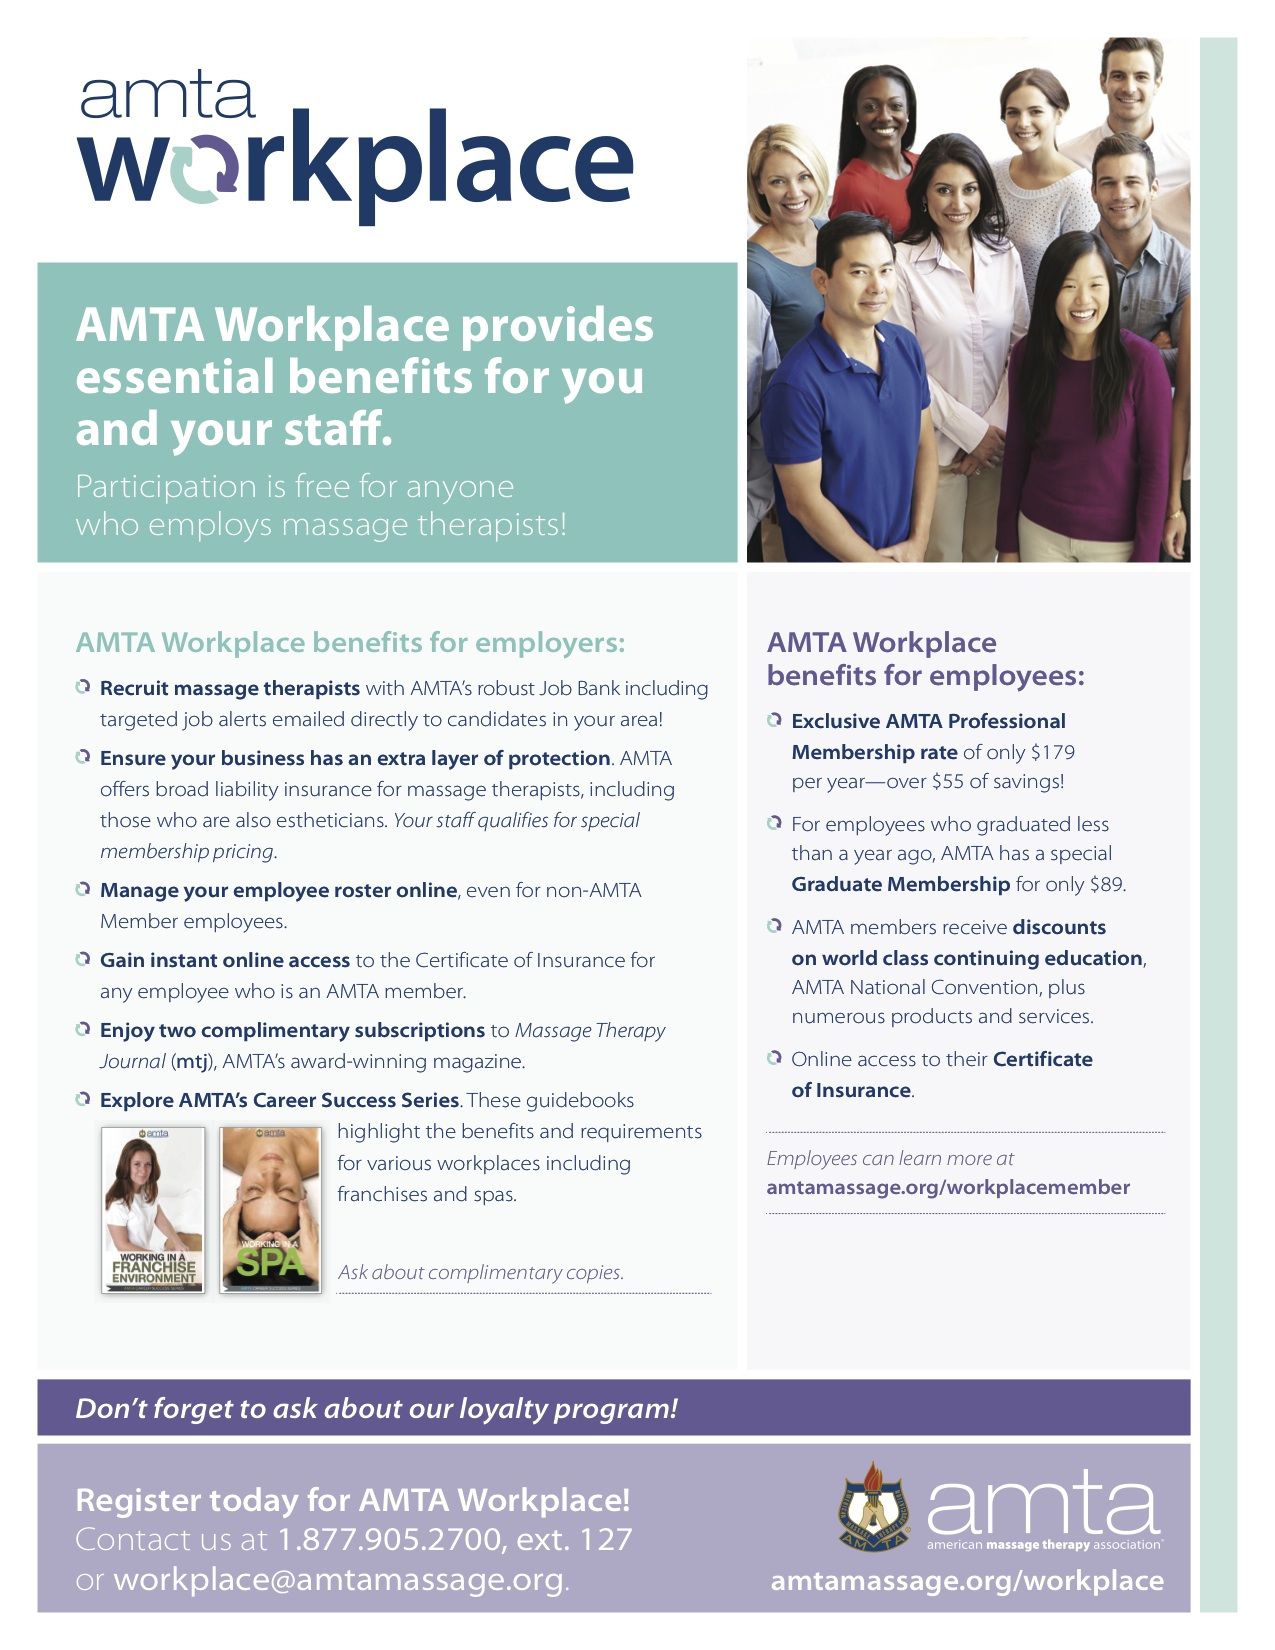 AMTA's new Workplace benefit